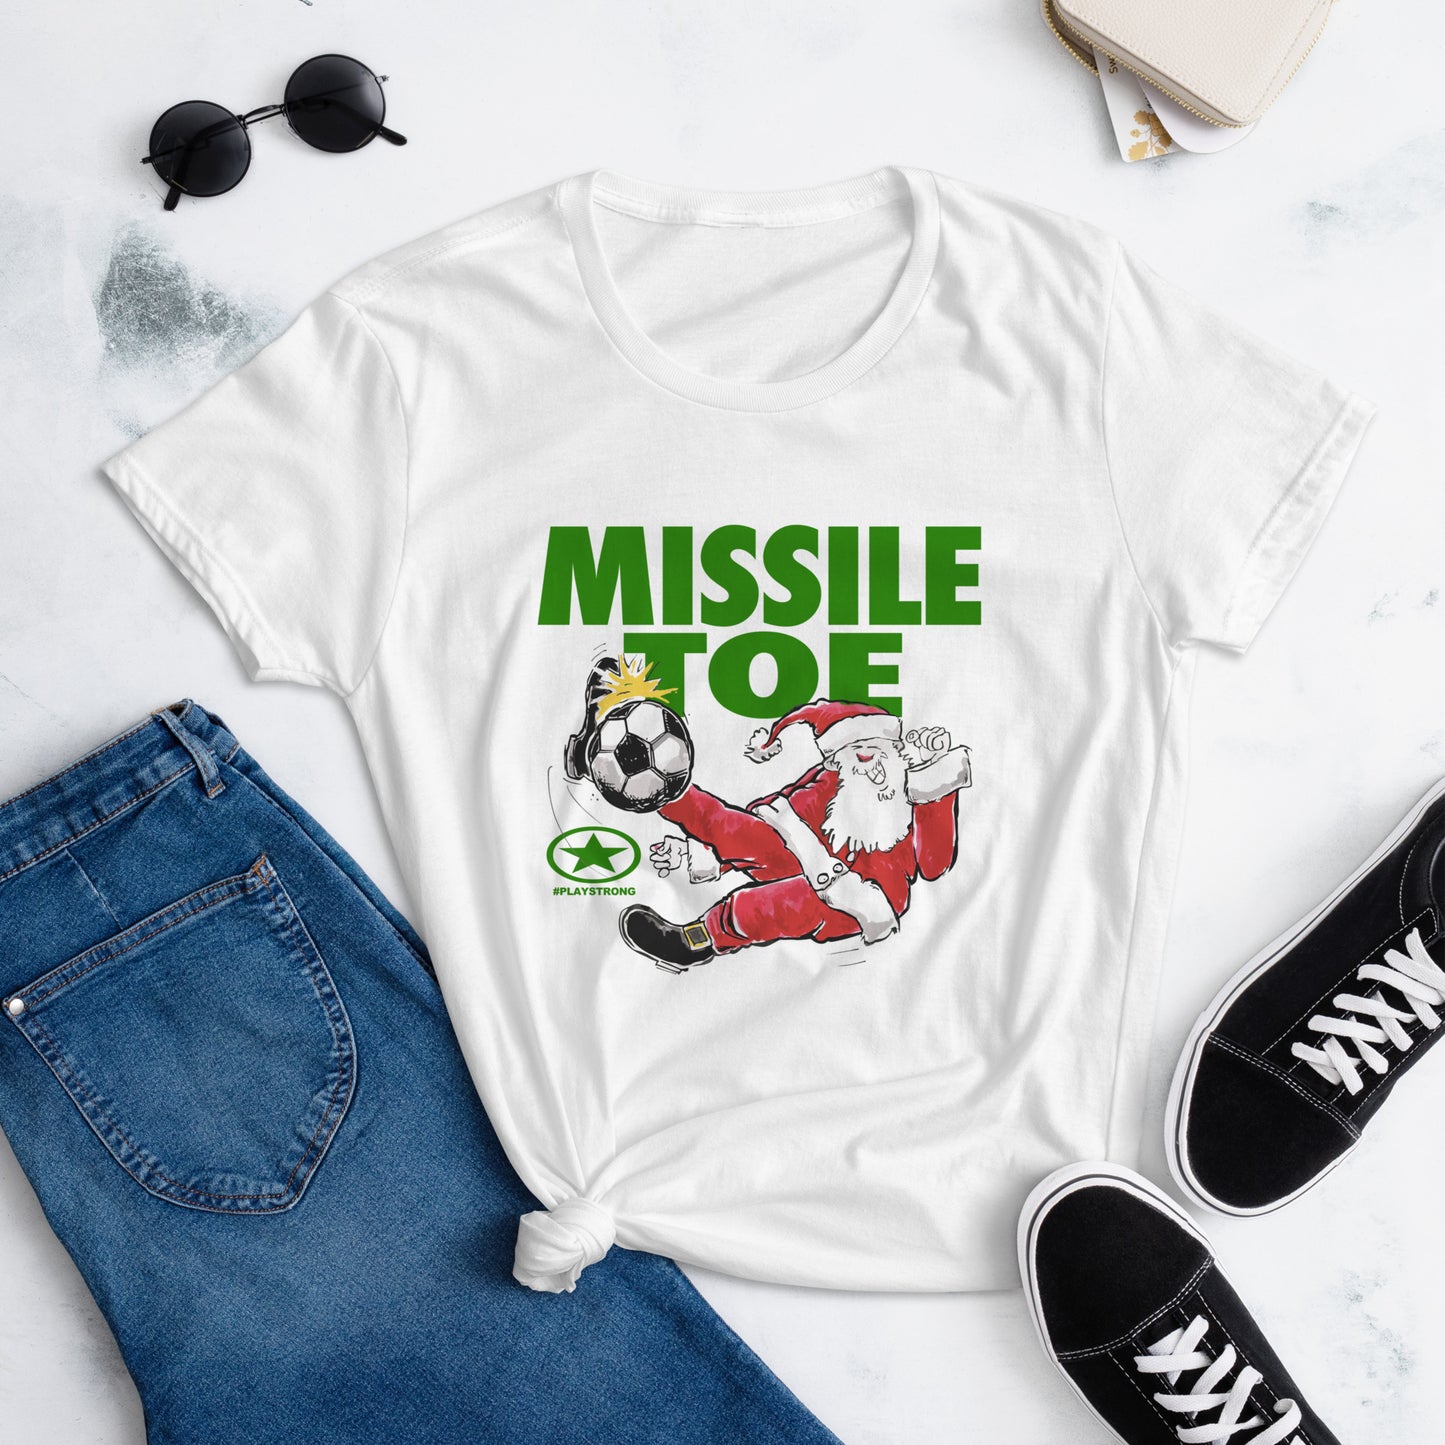 Santa Sports "Missile Toe" Soccer Women's short sleeve t-shirt